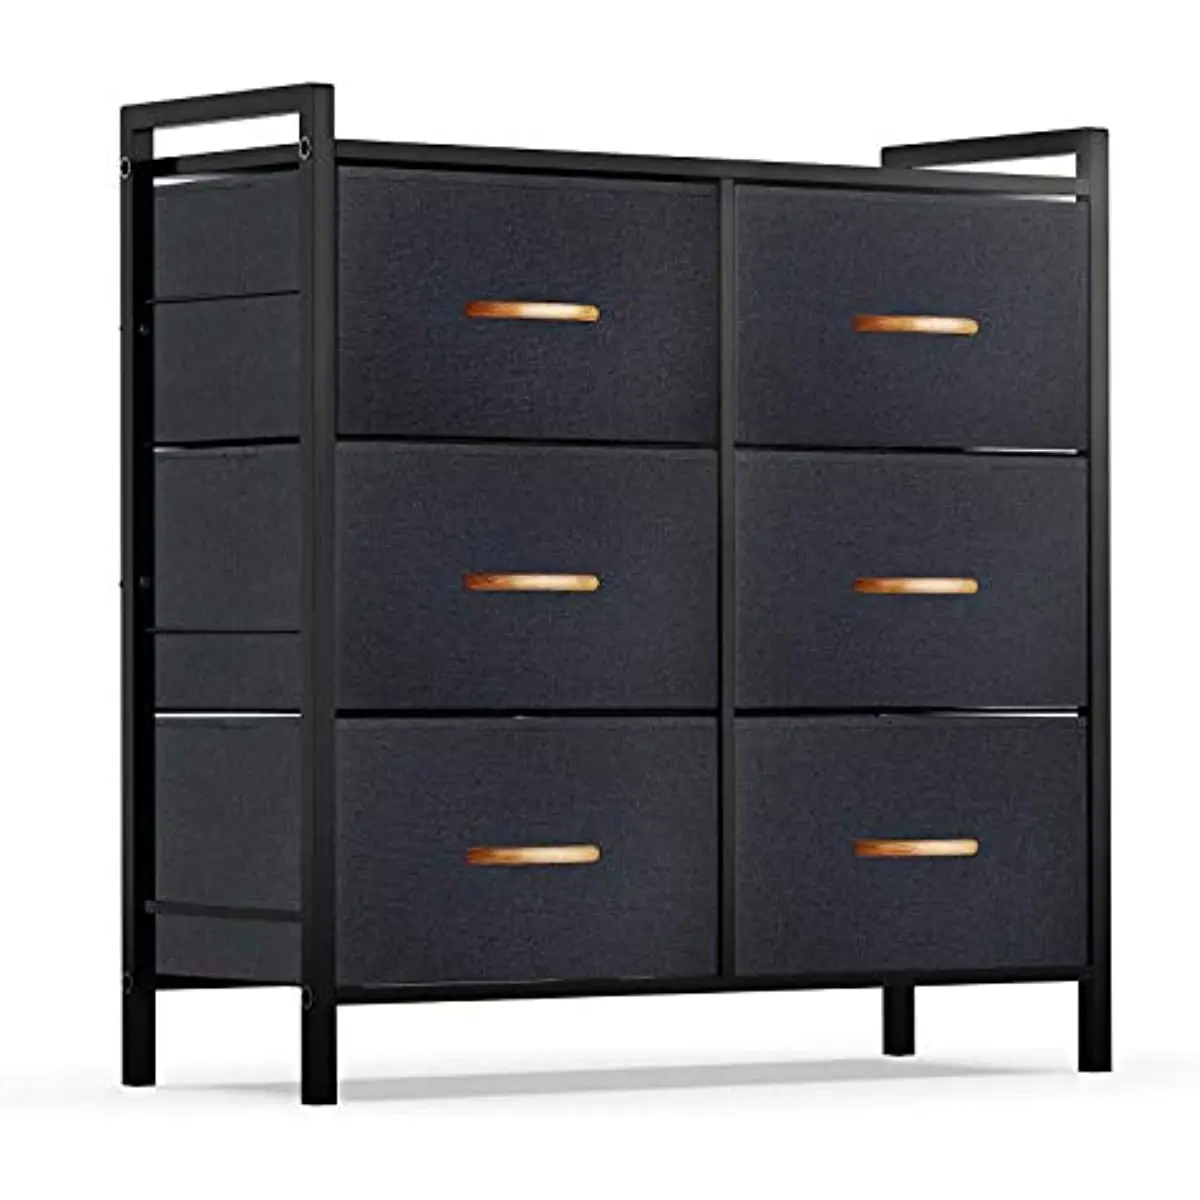 ROMOON Dresser Organizer with 6 Drawers, Fabric Storage Dresser Tower for Bedroom, Hallway, Entryway, Closets - Dark Grey